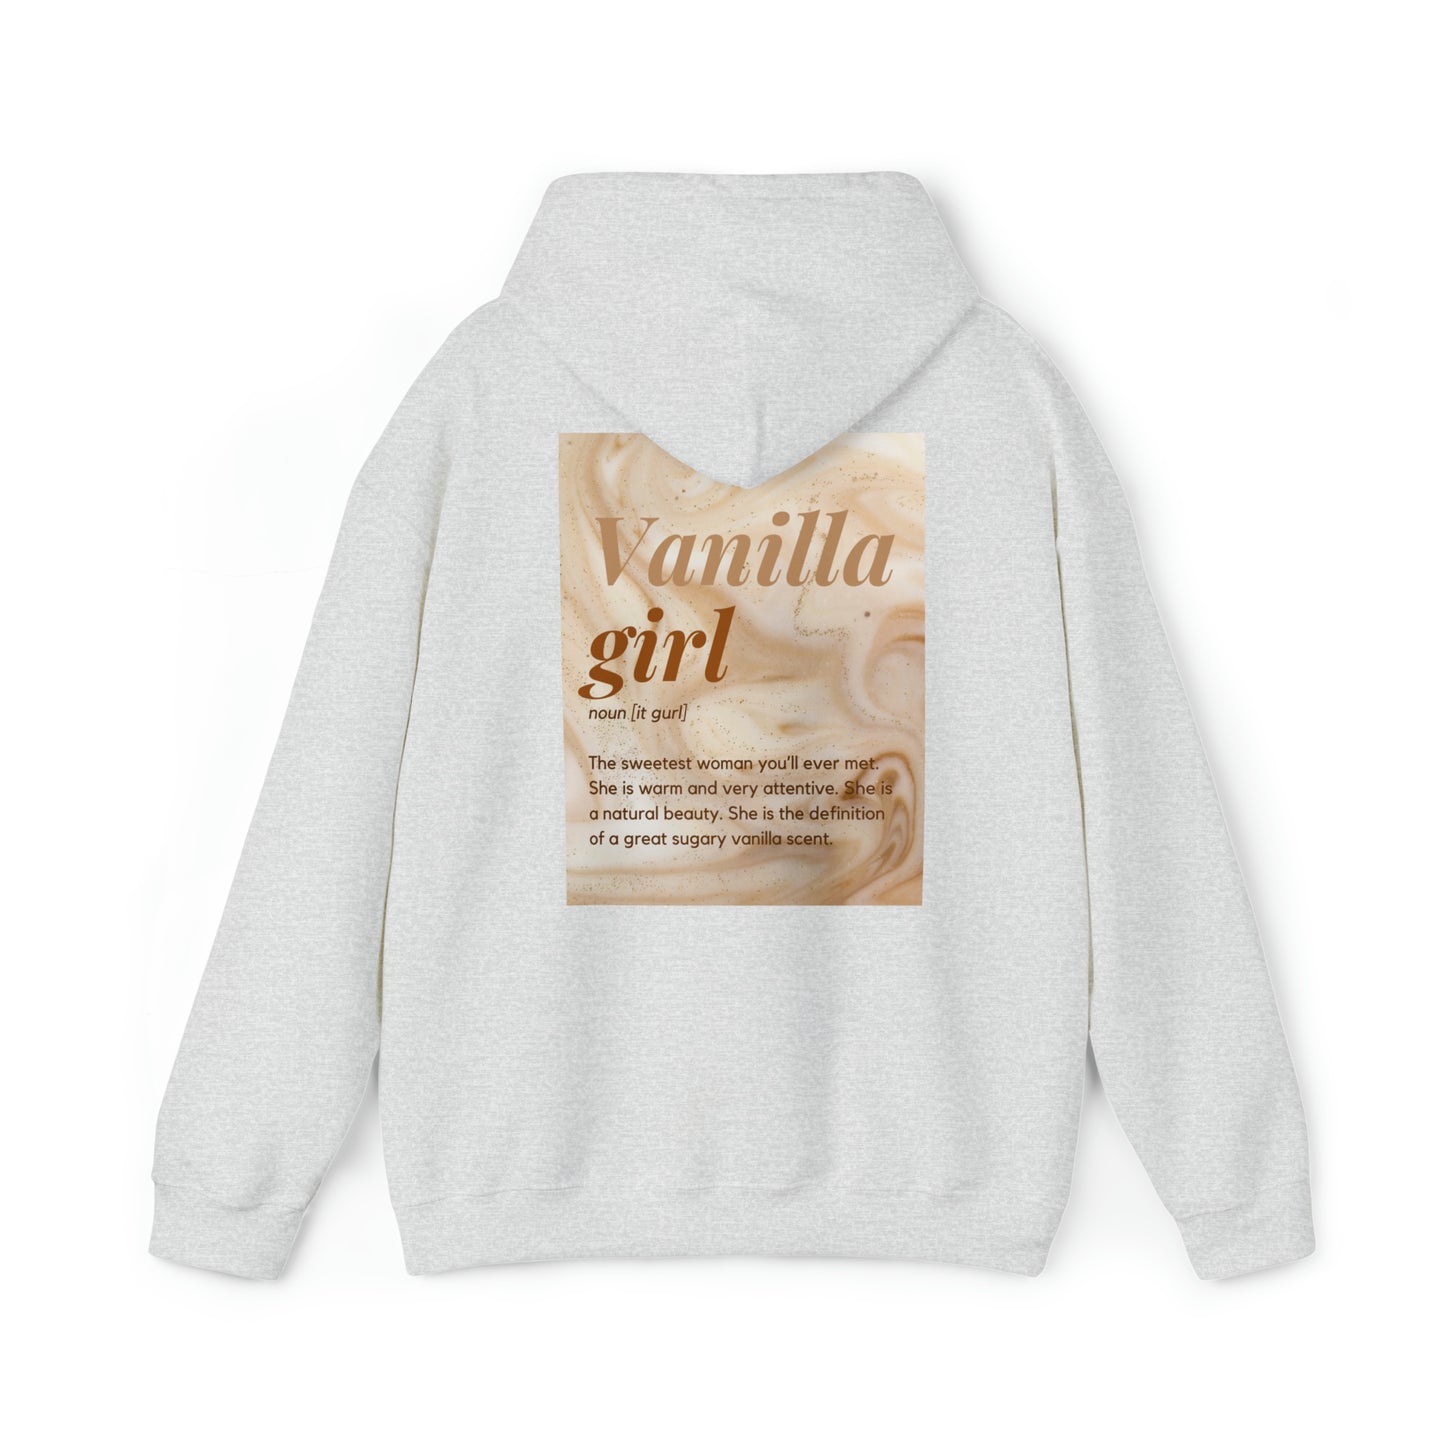 Vanilla girl hoodie